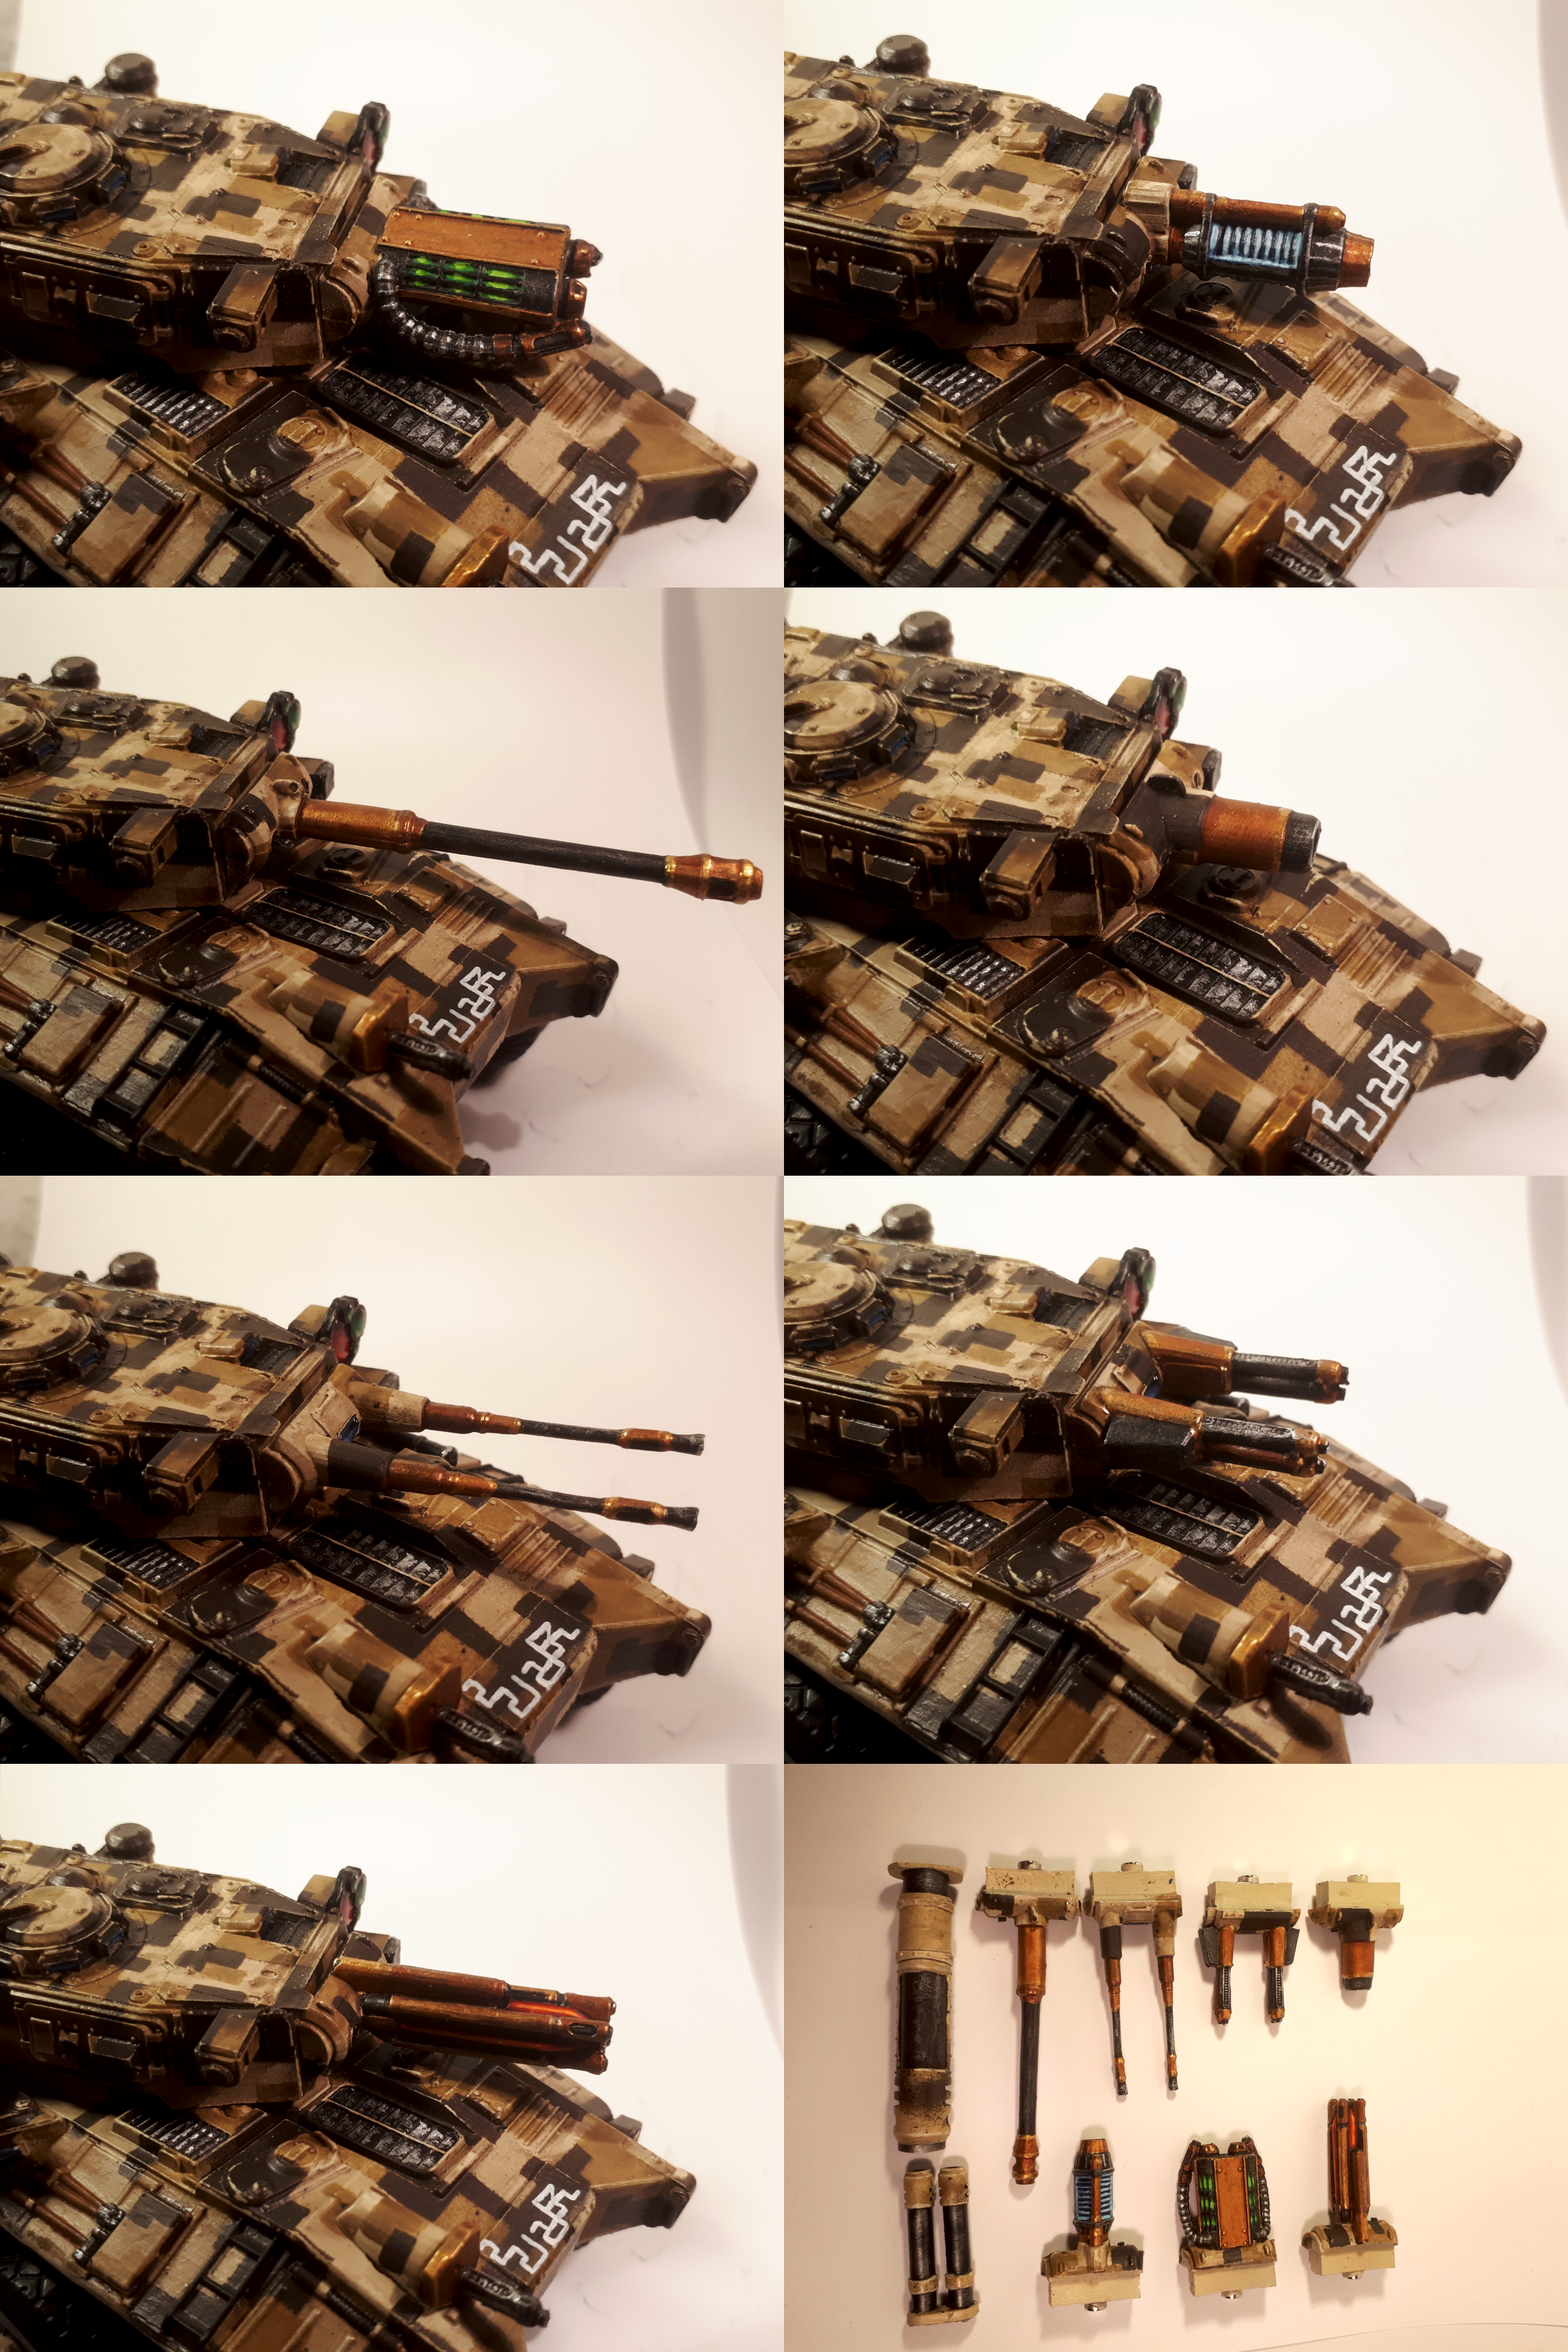 Digitial Camo, Imperial Guard, Salamander Scout Tank, Secret Weapons Miniatures